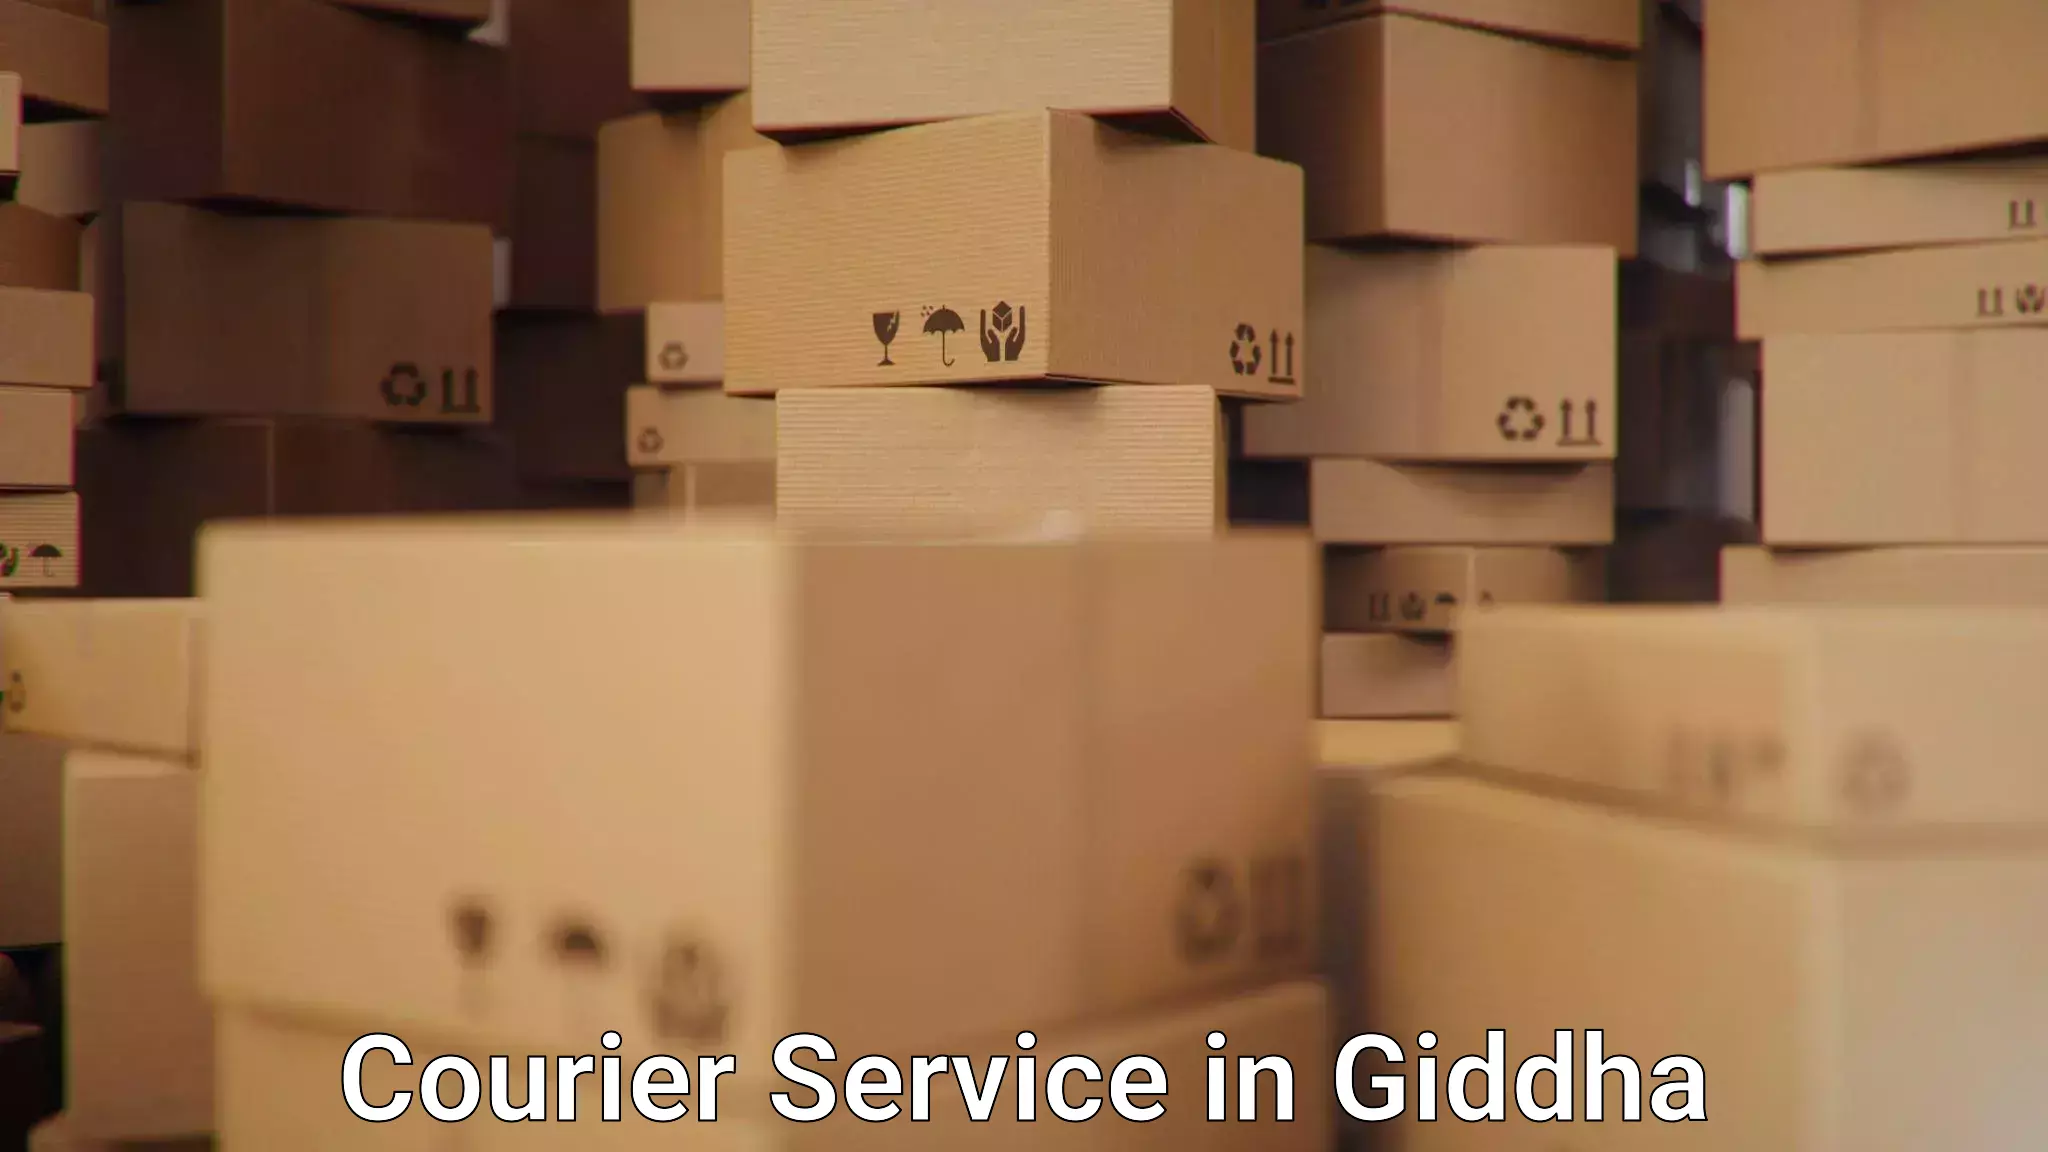 Courier service comparison in Giddha